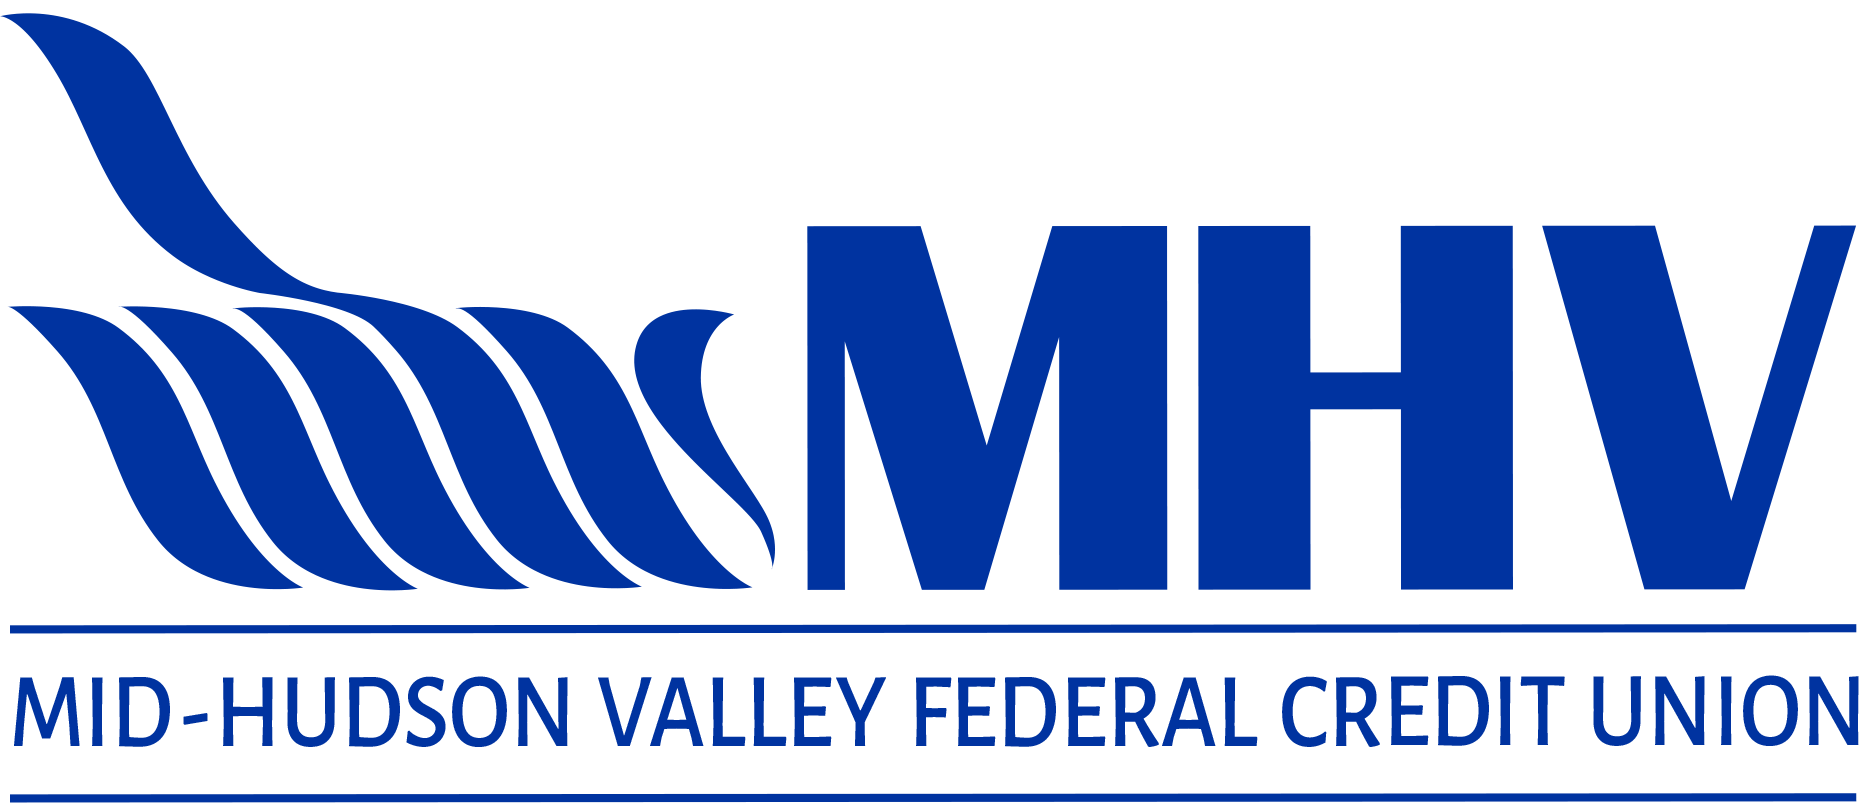 MHVFCU Logo